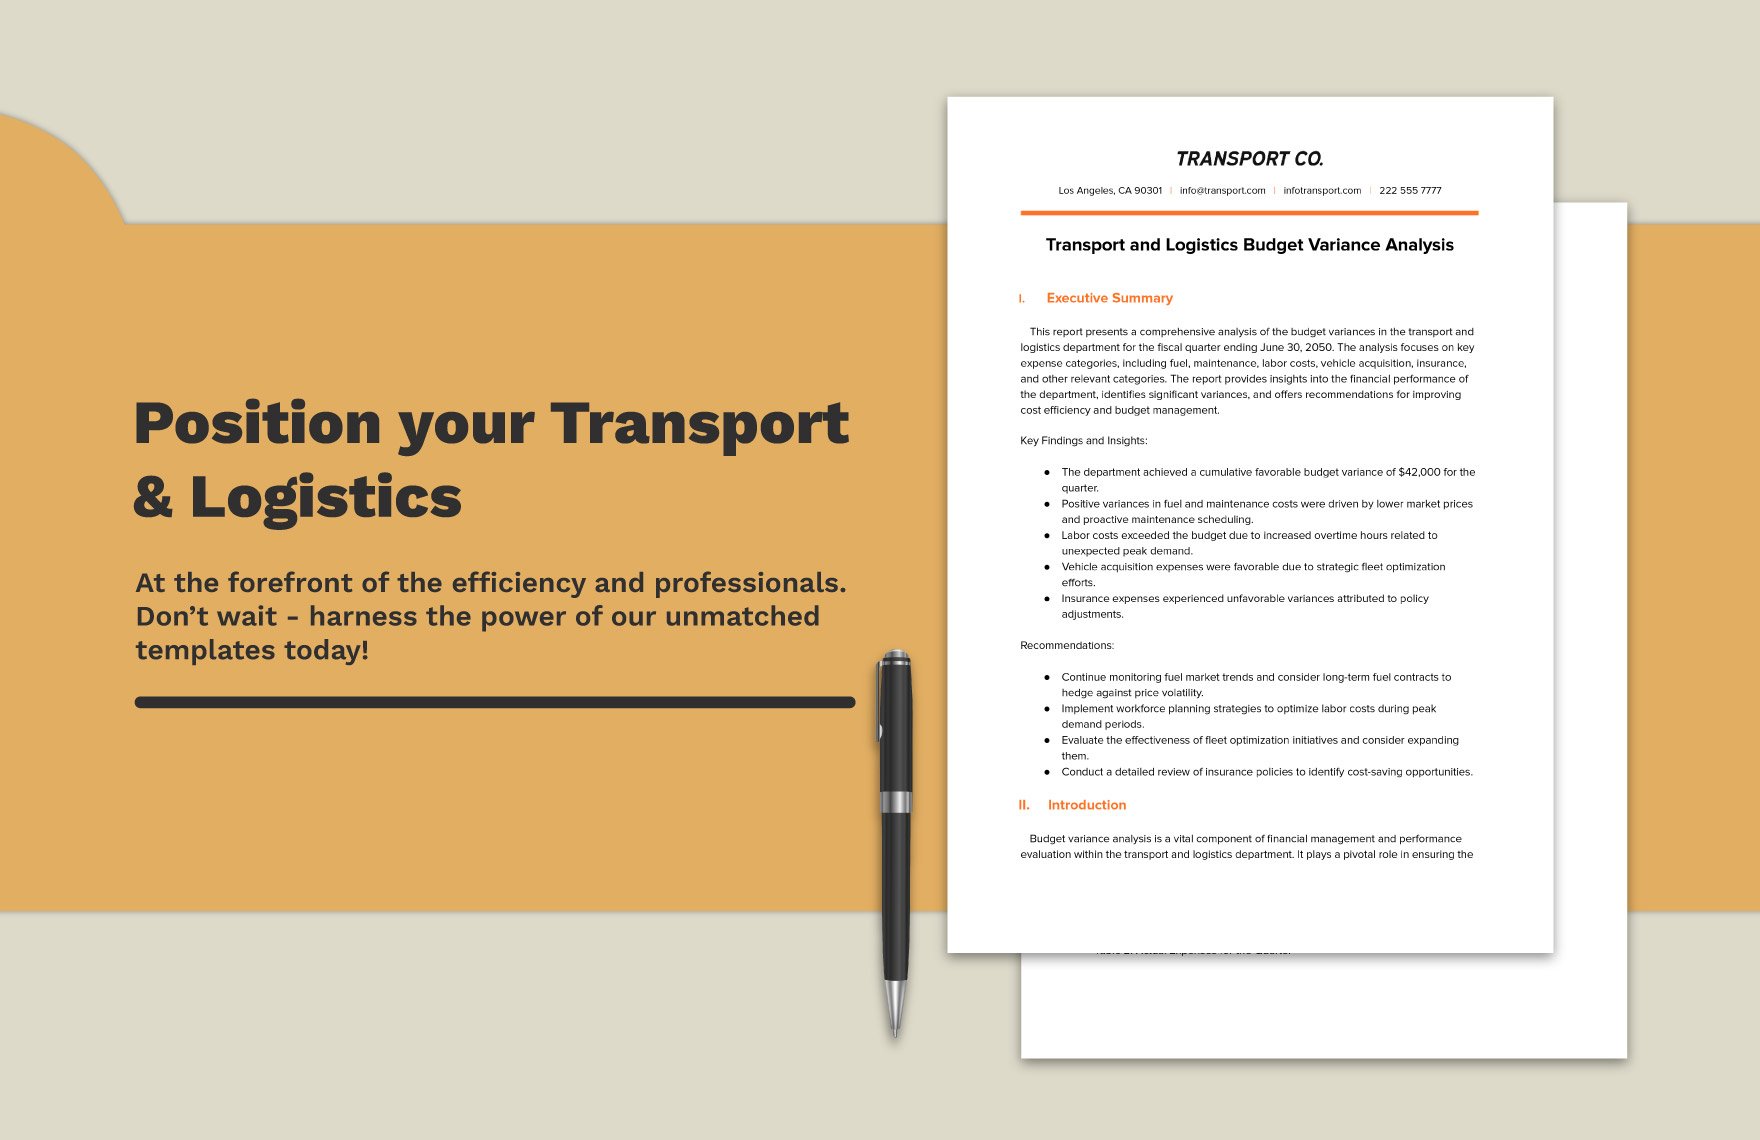 Transport and Logistics Budget Variance Analysis Template